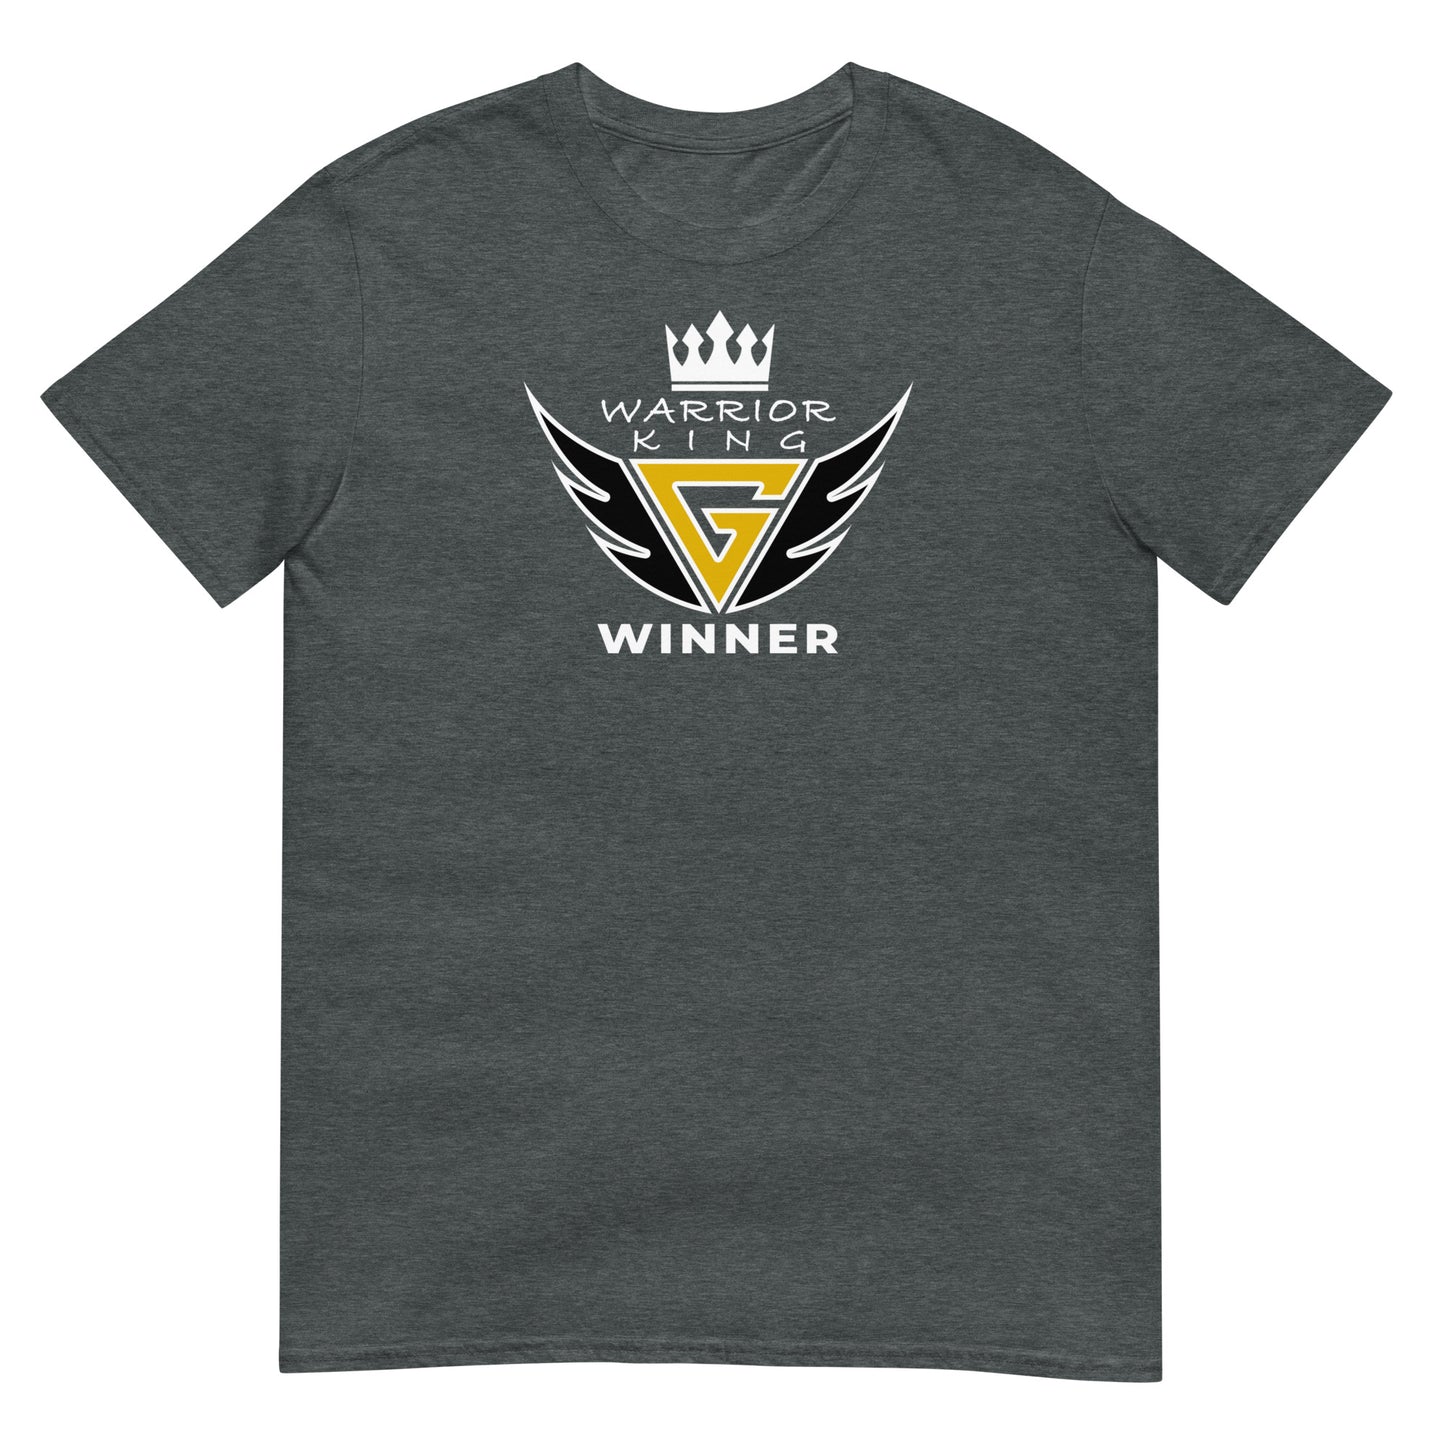 Exclusive Warrior King Winner T-Shirt